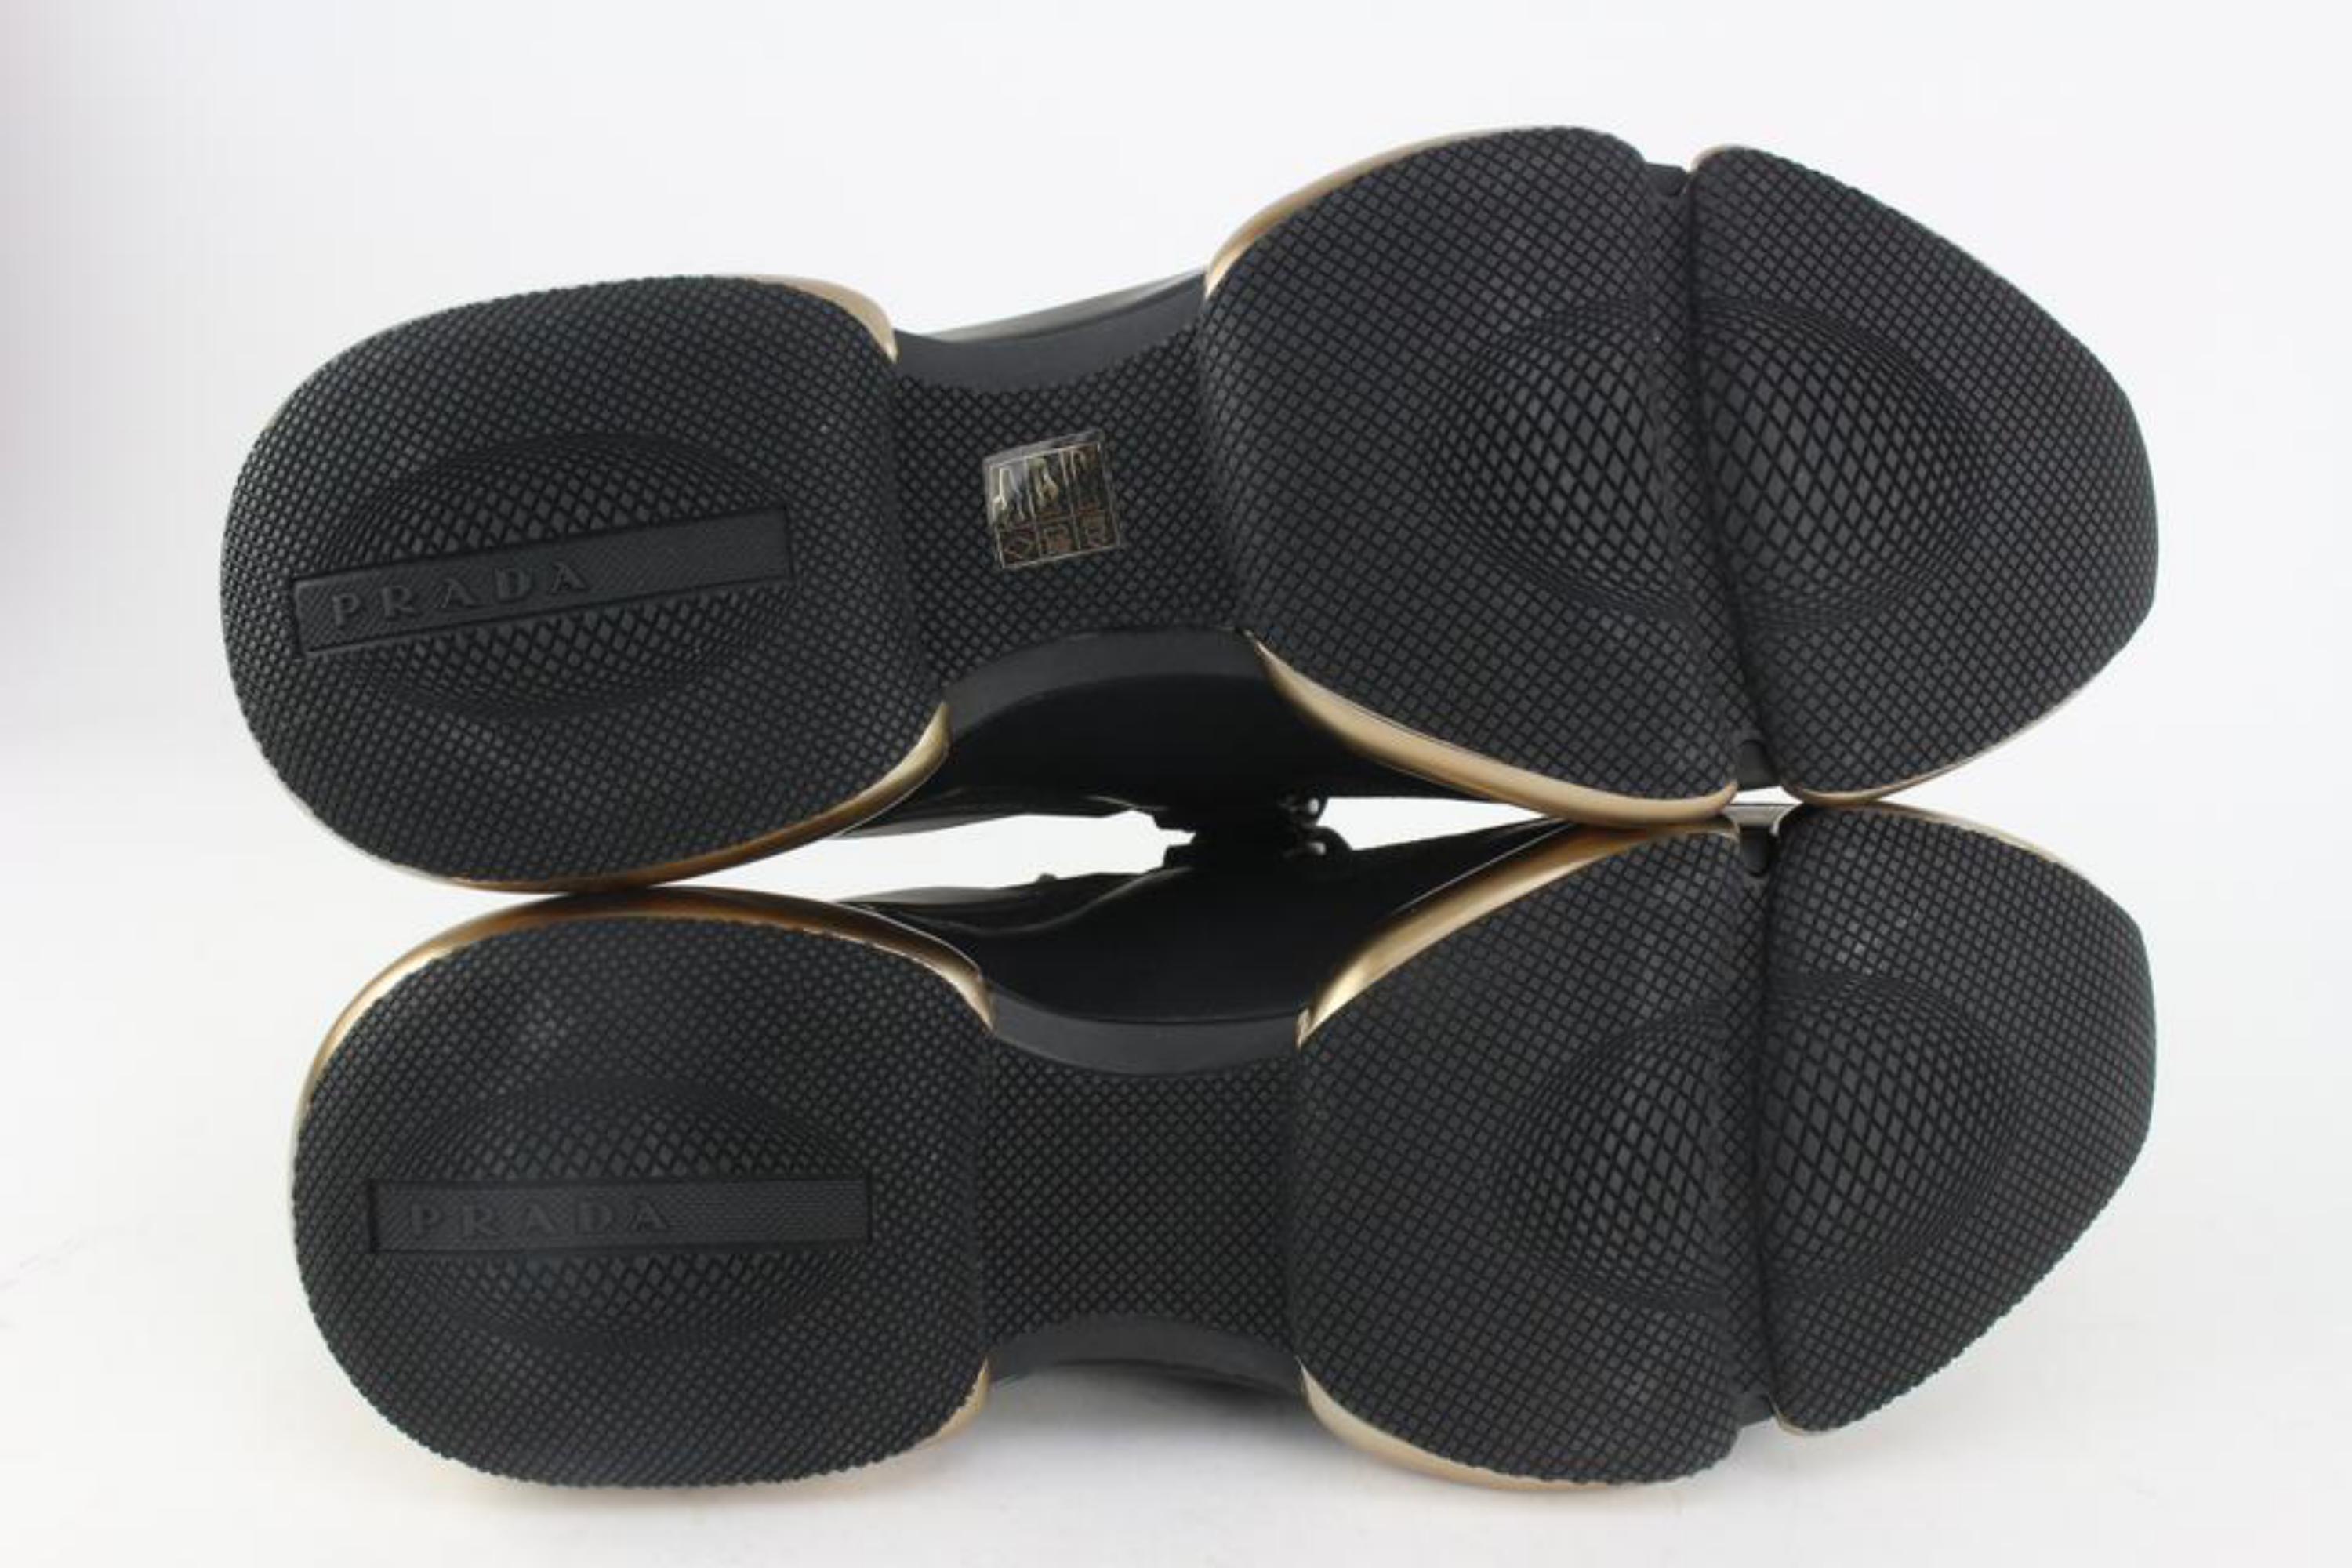 Prada Men's 11 20g064 Black x Gold Cloudbust Sneakers 1116p48
Made In: Italy
Measurements: Length:  13.5